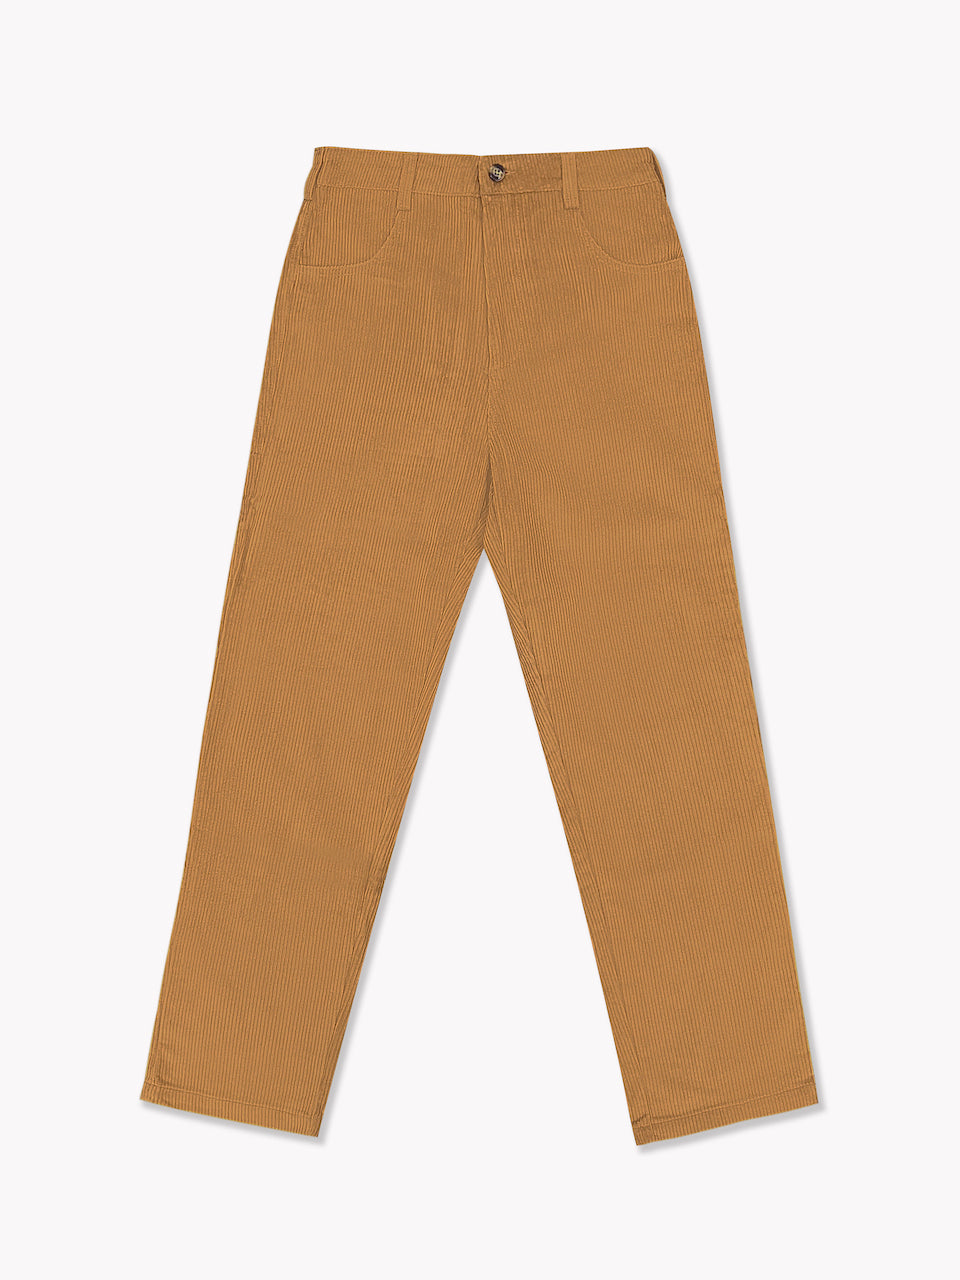 26 Men's Corduroy Pants Outfit Ideas & Styling Tips | Corduroy pants men, Corduroy  pants outfit, Pants outfit men